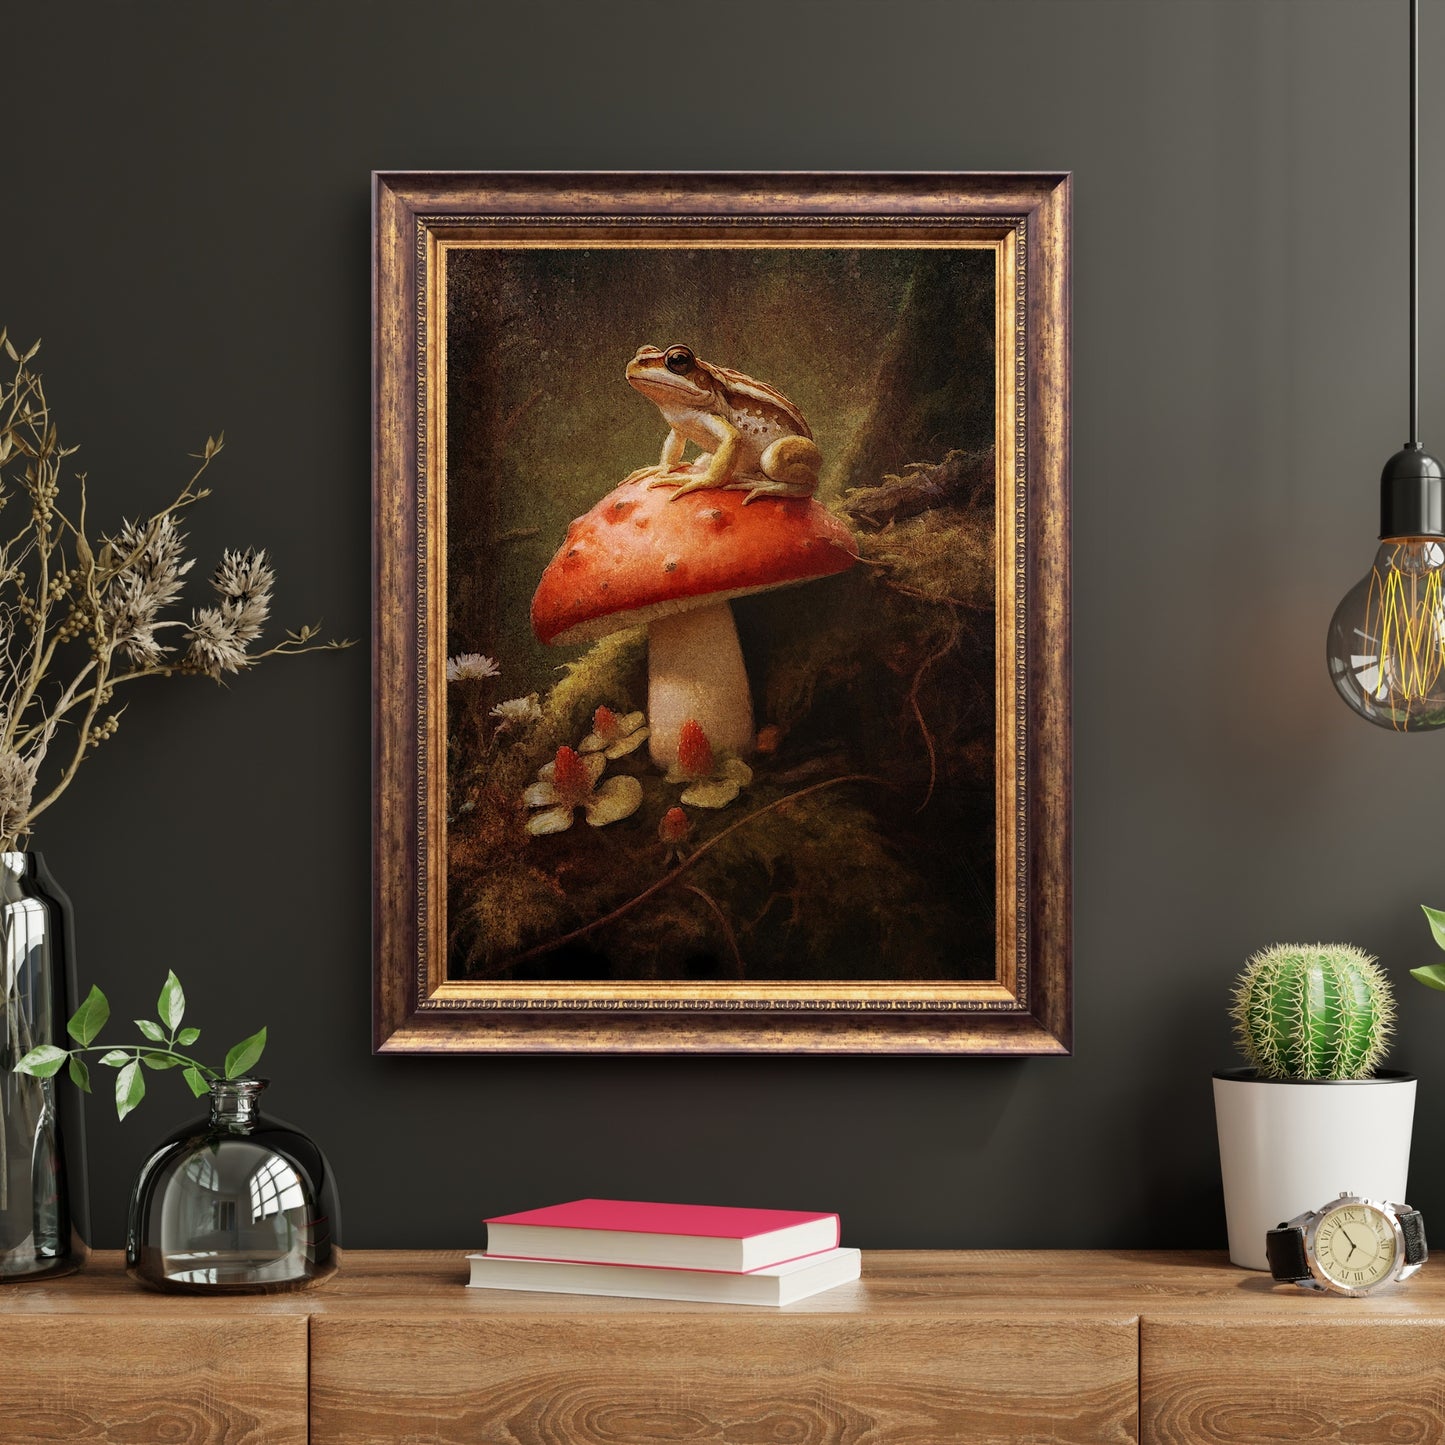 Moody Frog on Mushroom Gothic Wall Art Paper Poster Prints Dark Cottagecore Grunge Goblincore Vintage Botanical Decor Witchy Gothic Frog Mushroom Poster